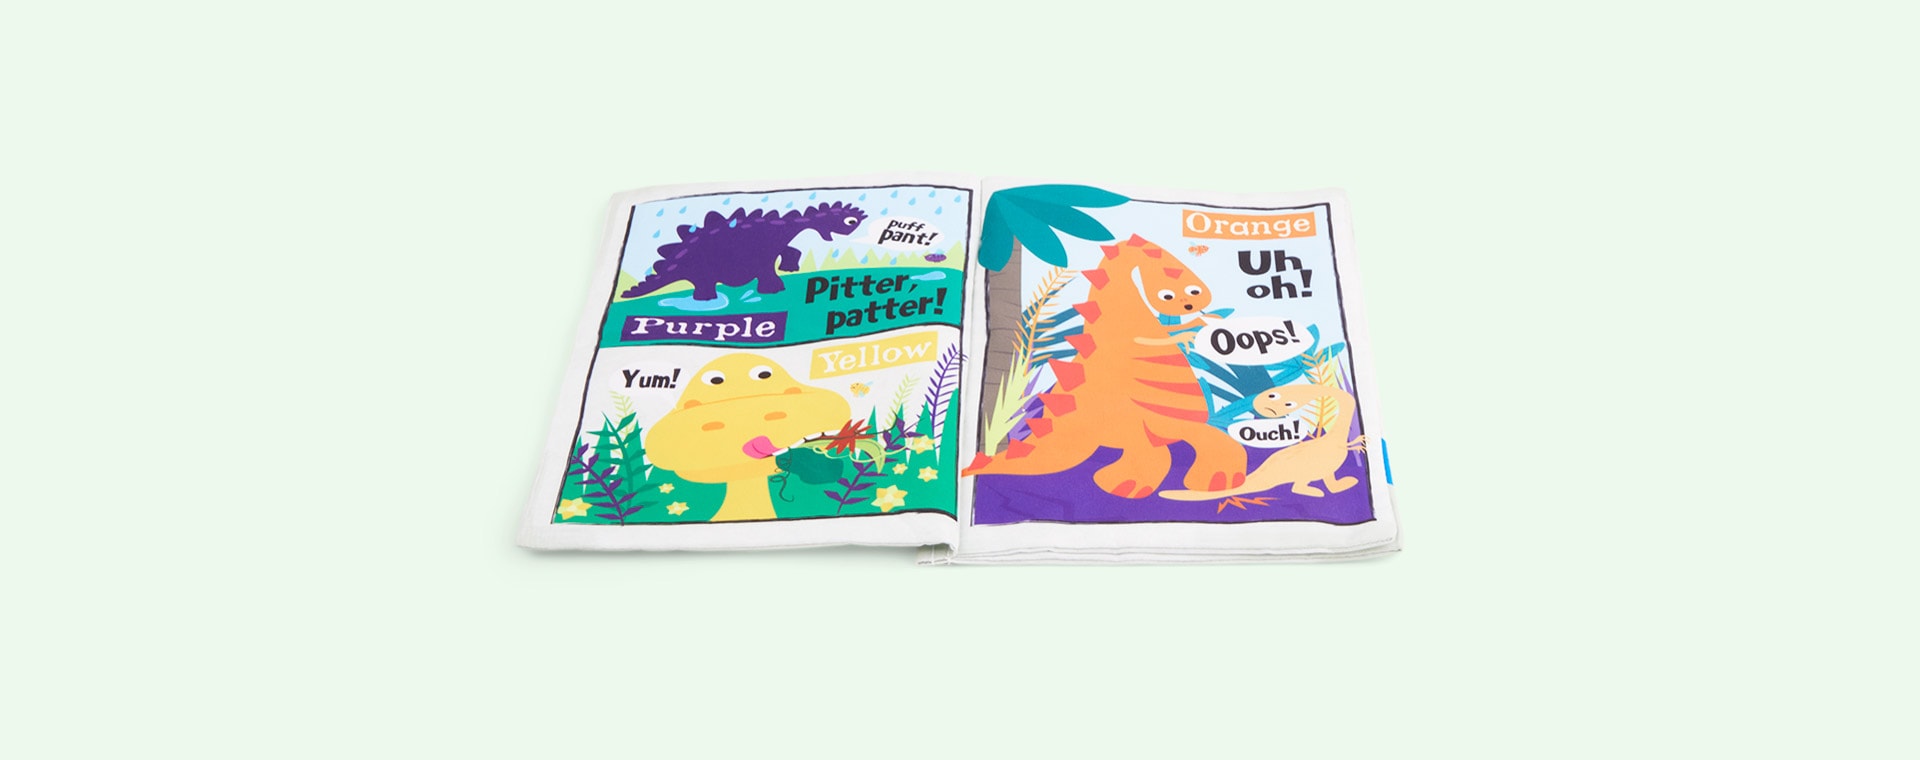 Rainbow Dinosaurs Jo & Nic's Crinkly Cloth Books Crinkly Newspaper